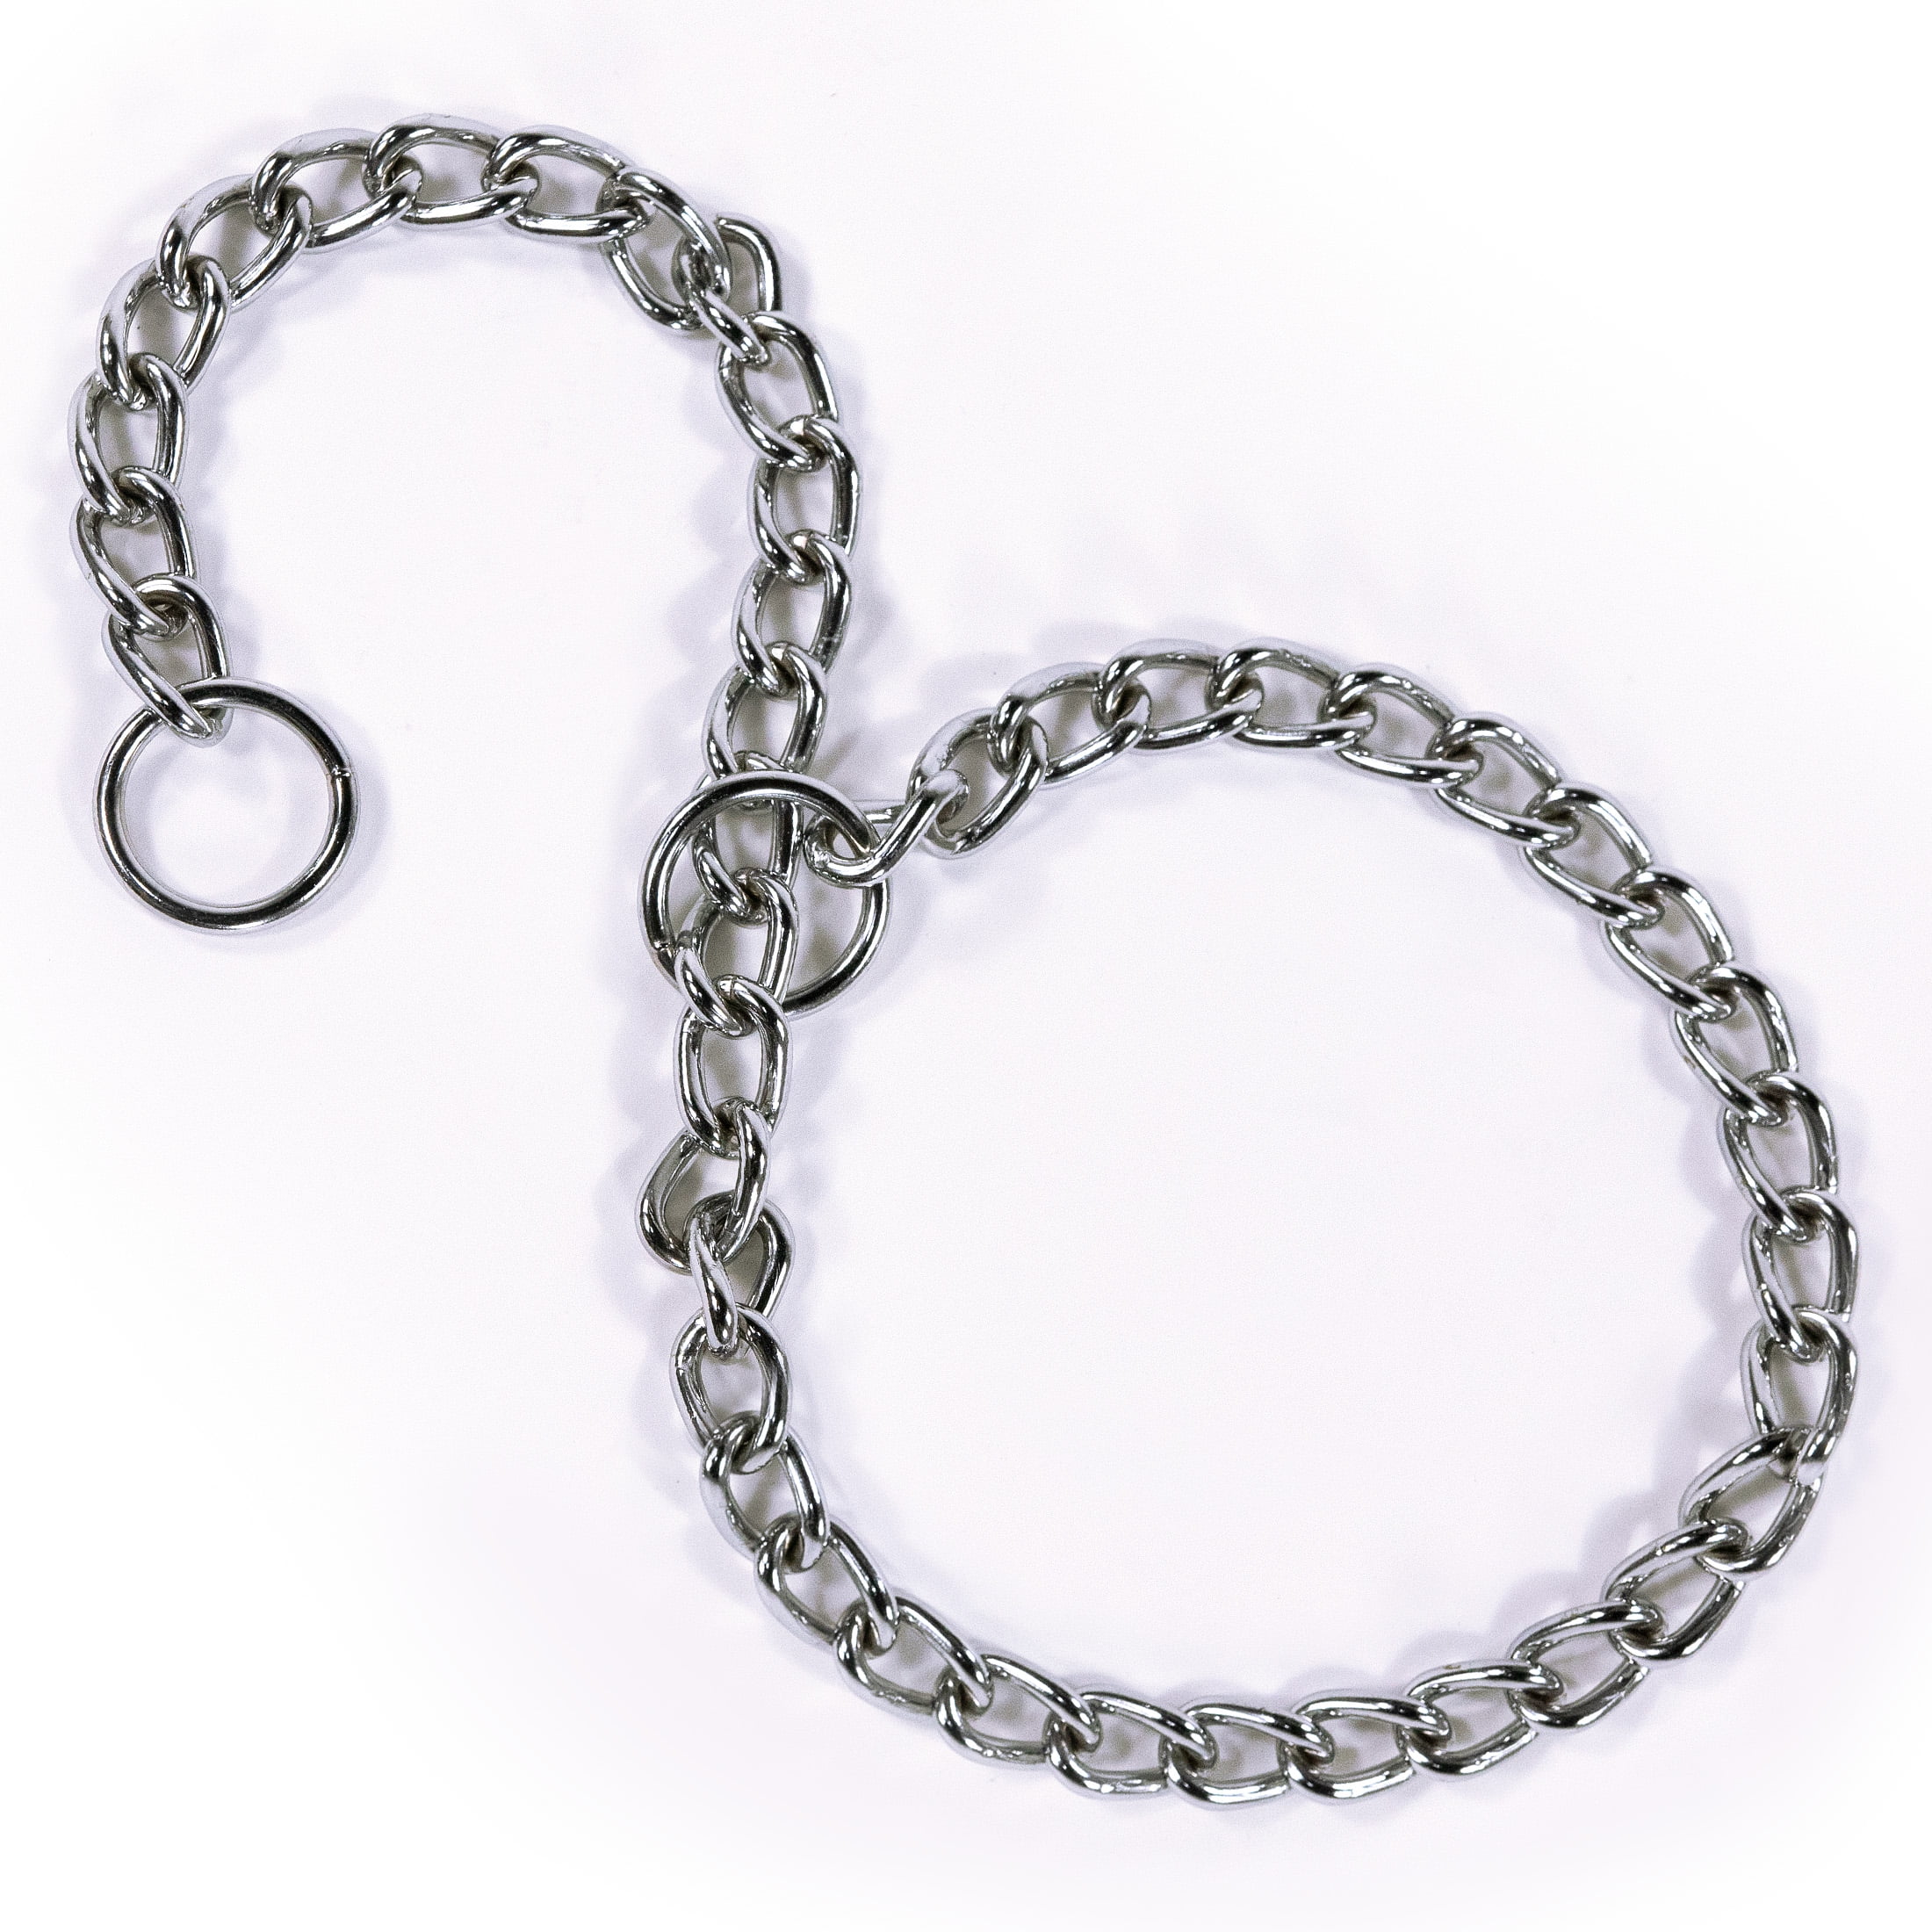 Gold Choke Dog Chain Collars Chrome Metal Slip Show Collar Necklace M L XL XXL 